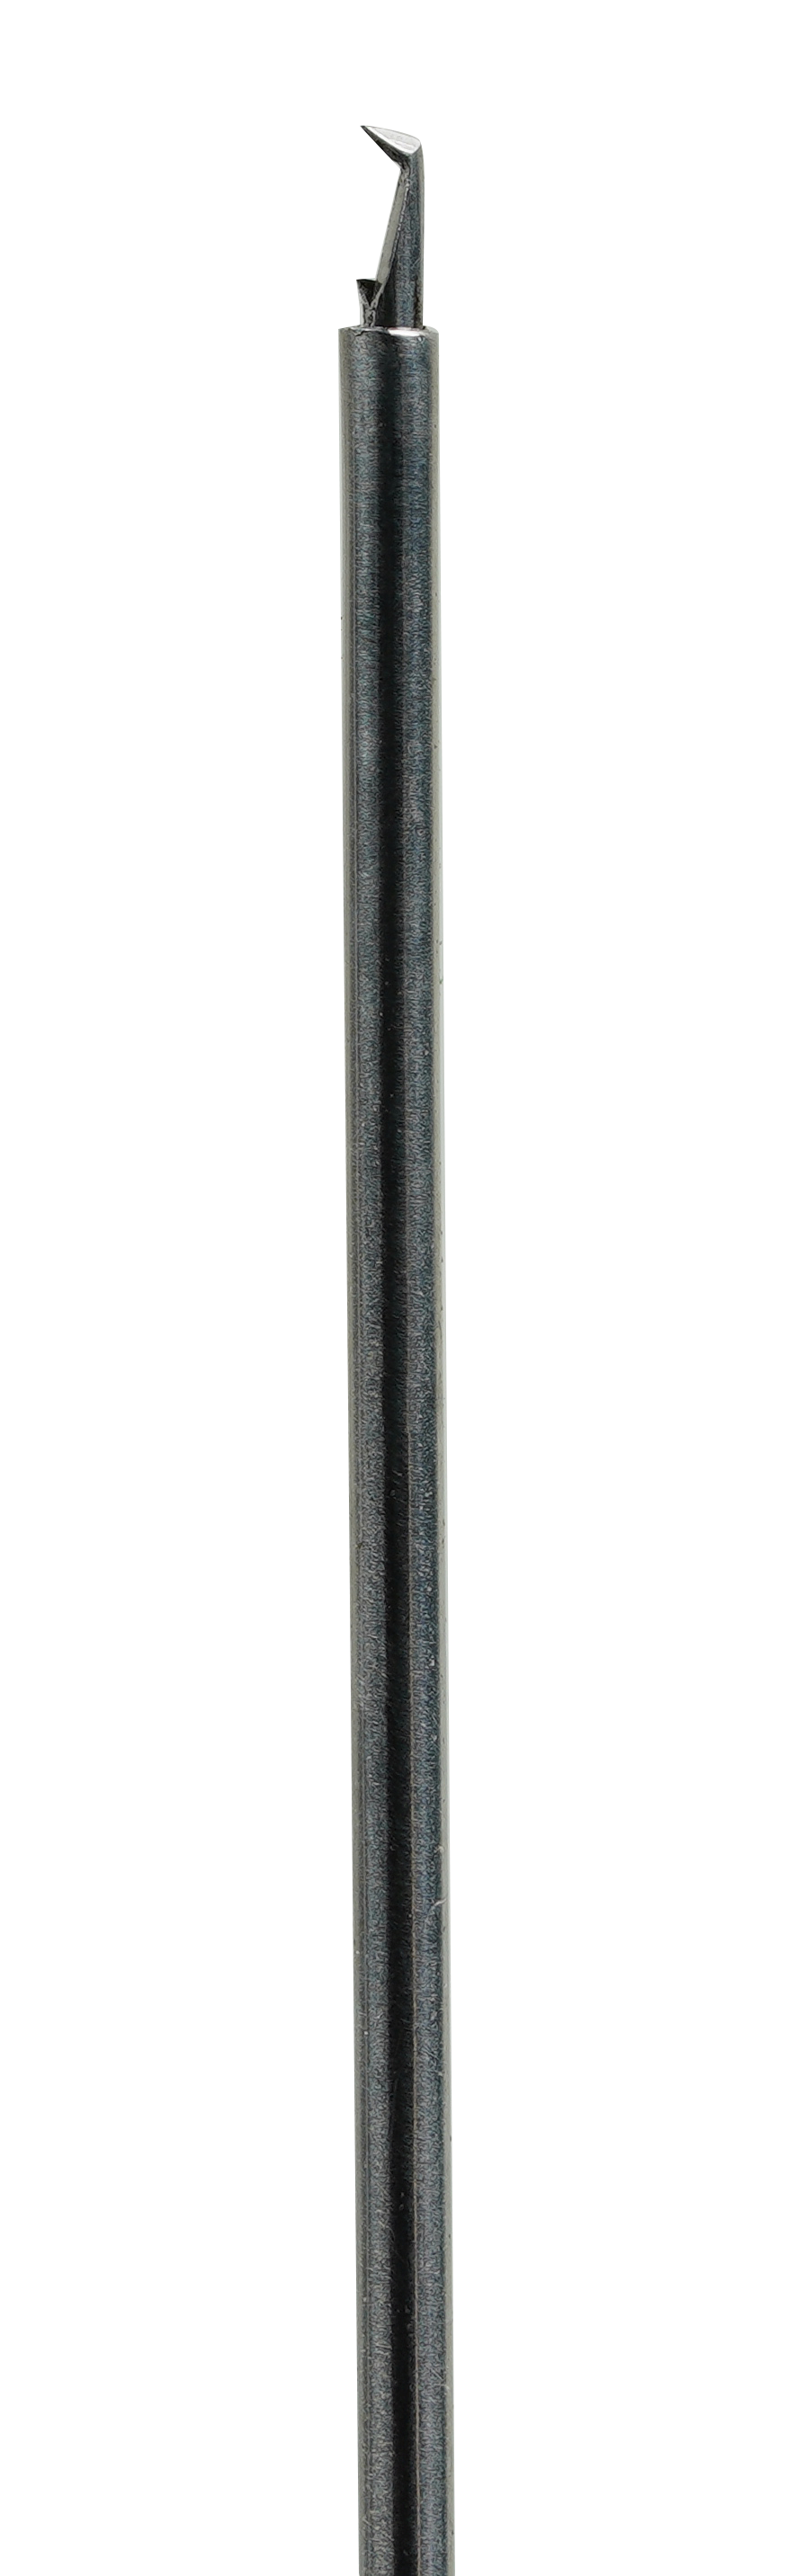 UN-3122 (23G) Pinzas de mordazas lisas de acero inoxidable